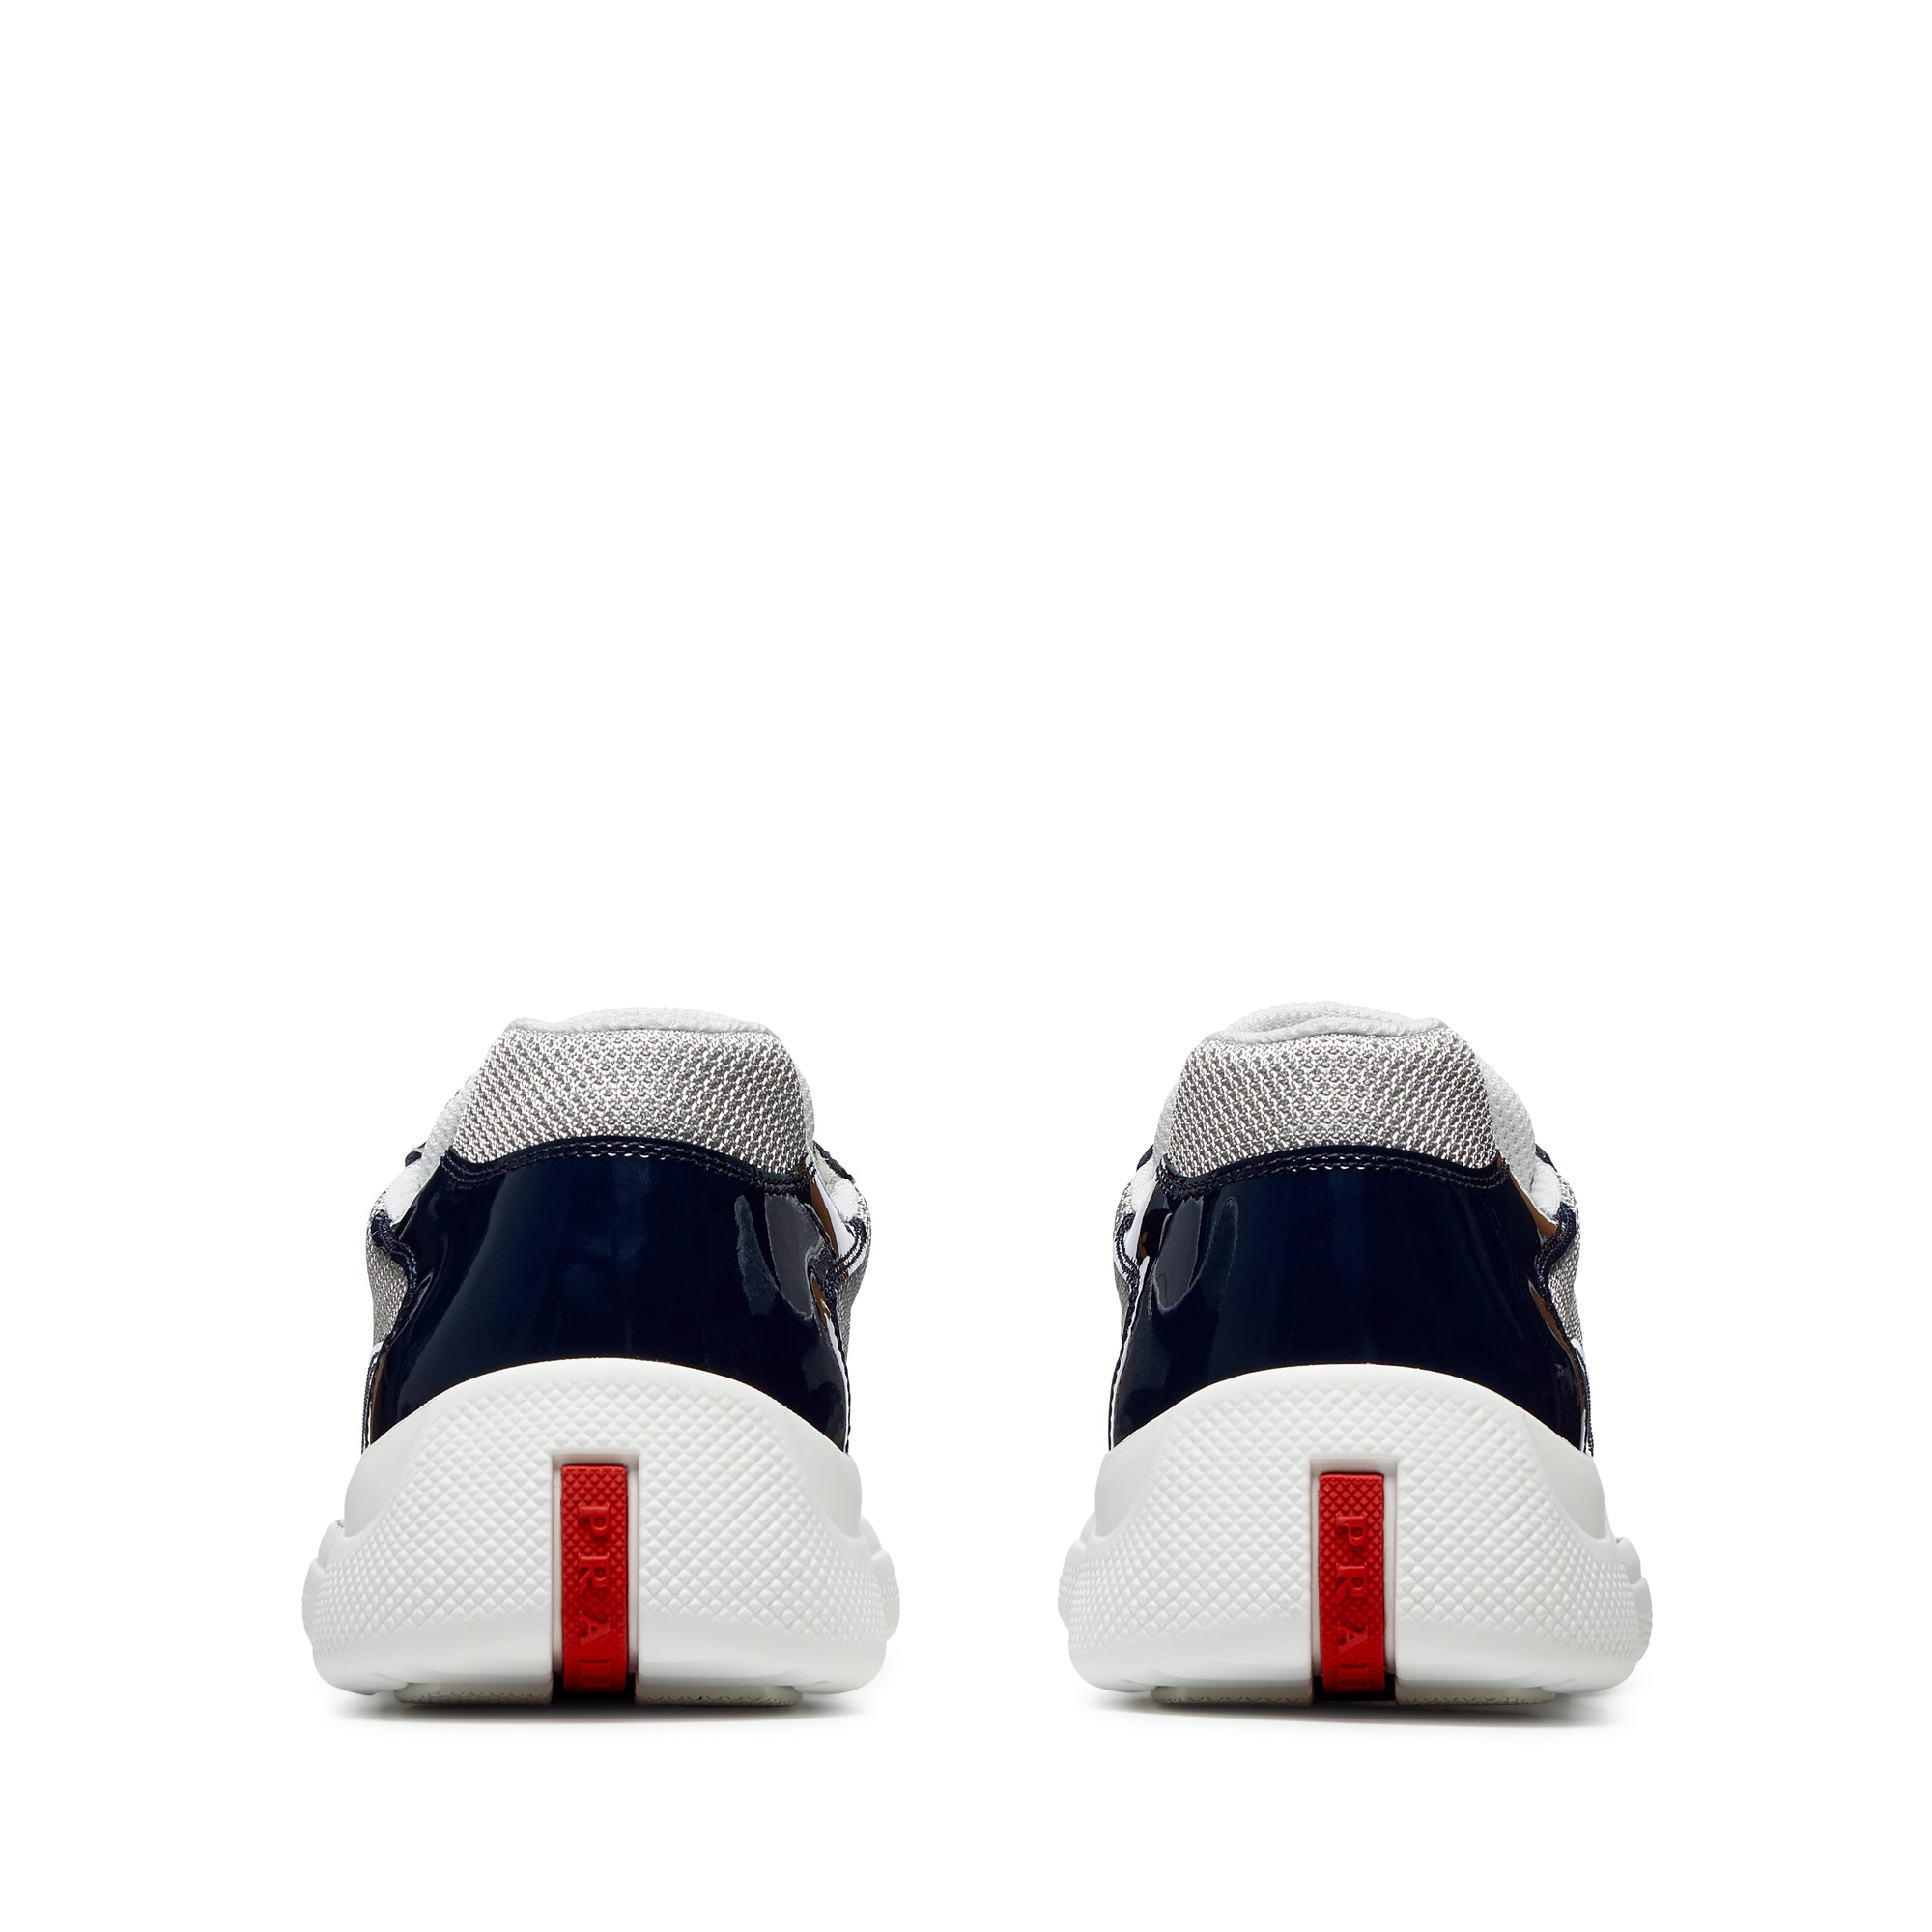 Prada - Men's America's Cup Sneakers - (Royal Blue/Silver) view 3